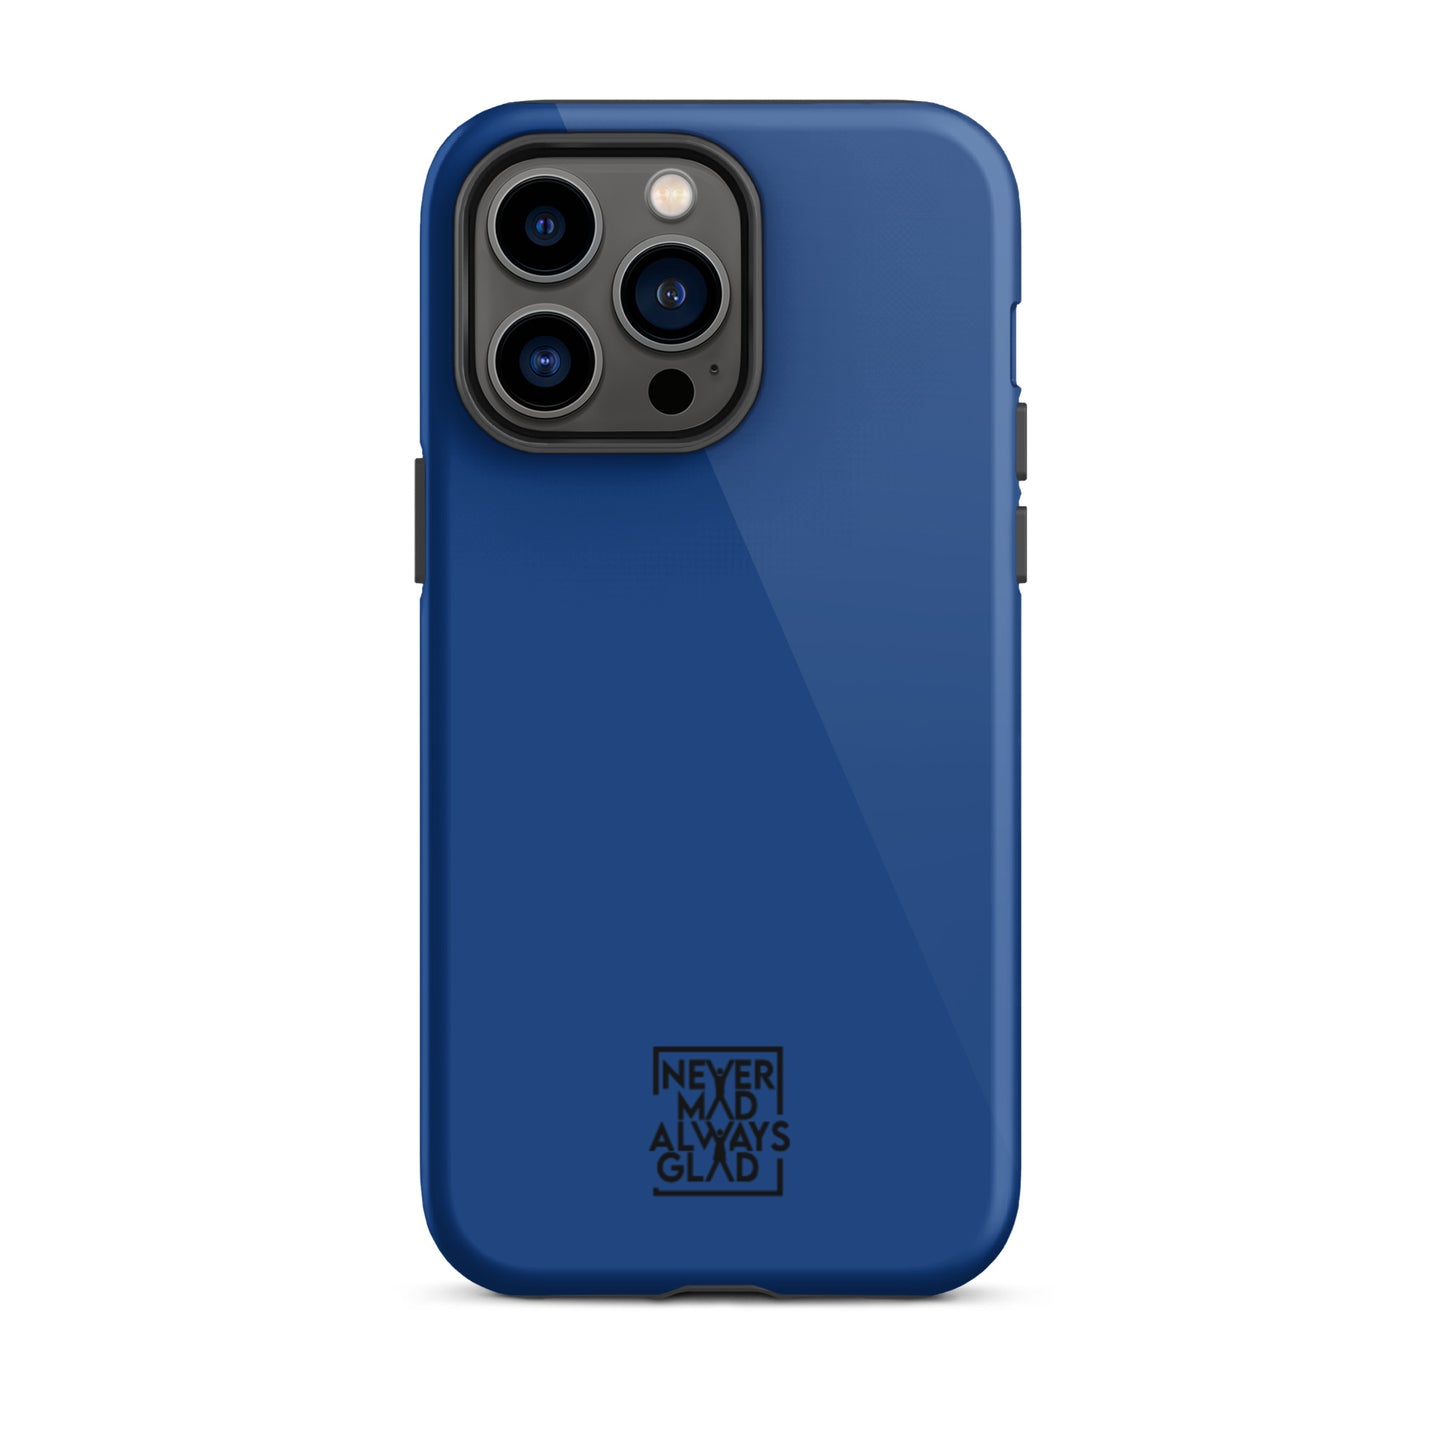 NMAG Blue Tough iPhone case